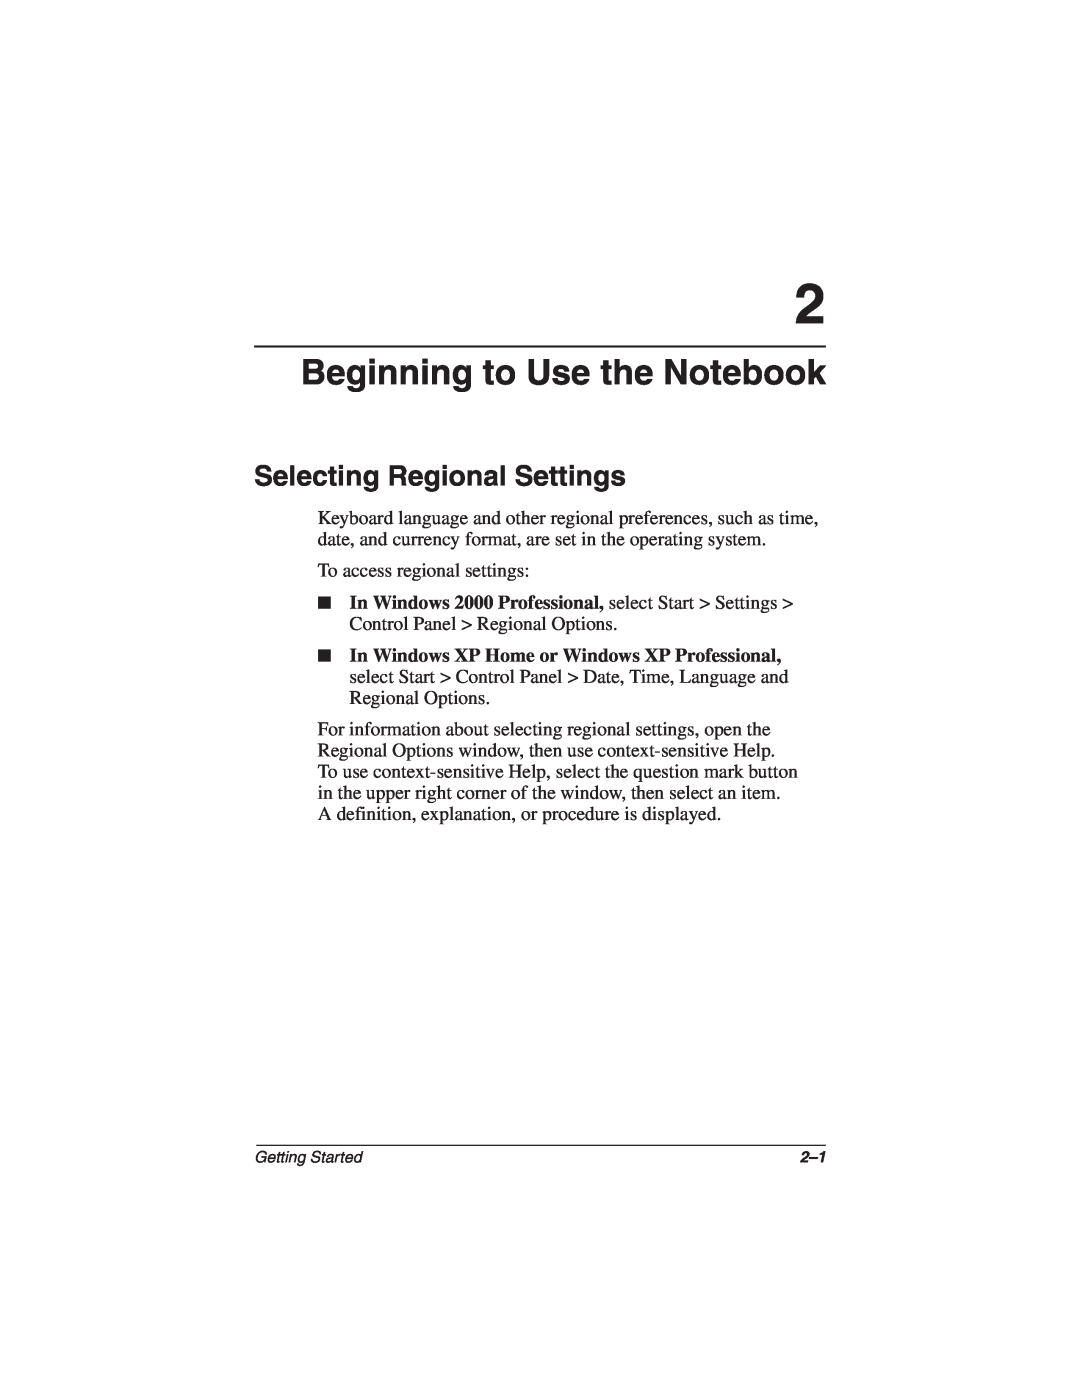 HP 1535AP, 1565AP, 1545AP, 1540AP, 1555AP, 1550AP, 1527EA, 1525CA Beginning to Use the Notebook, Selecting Regional Settings 